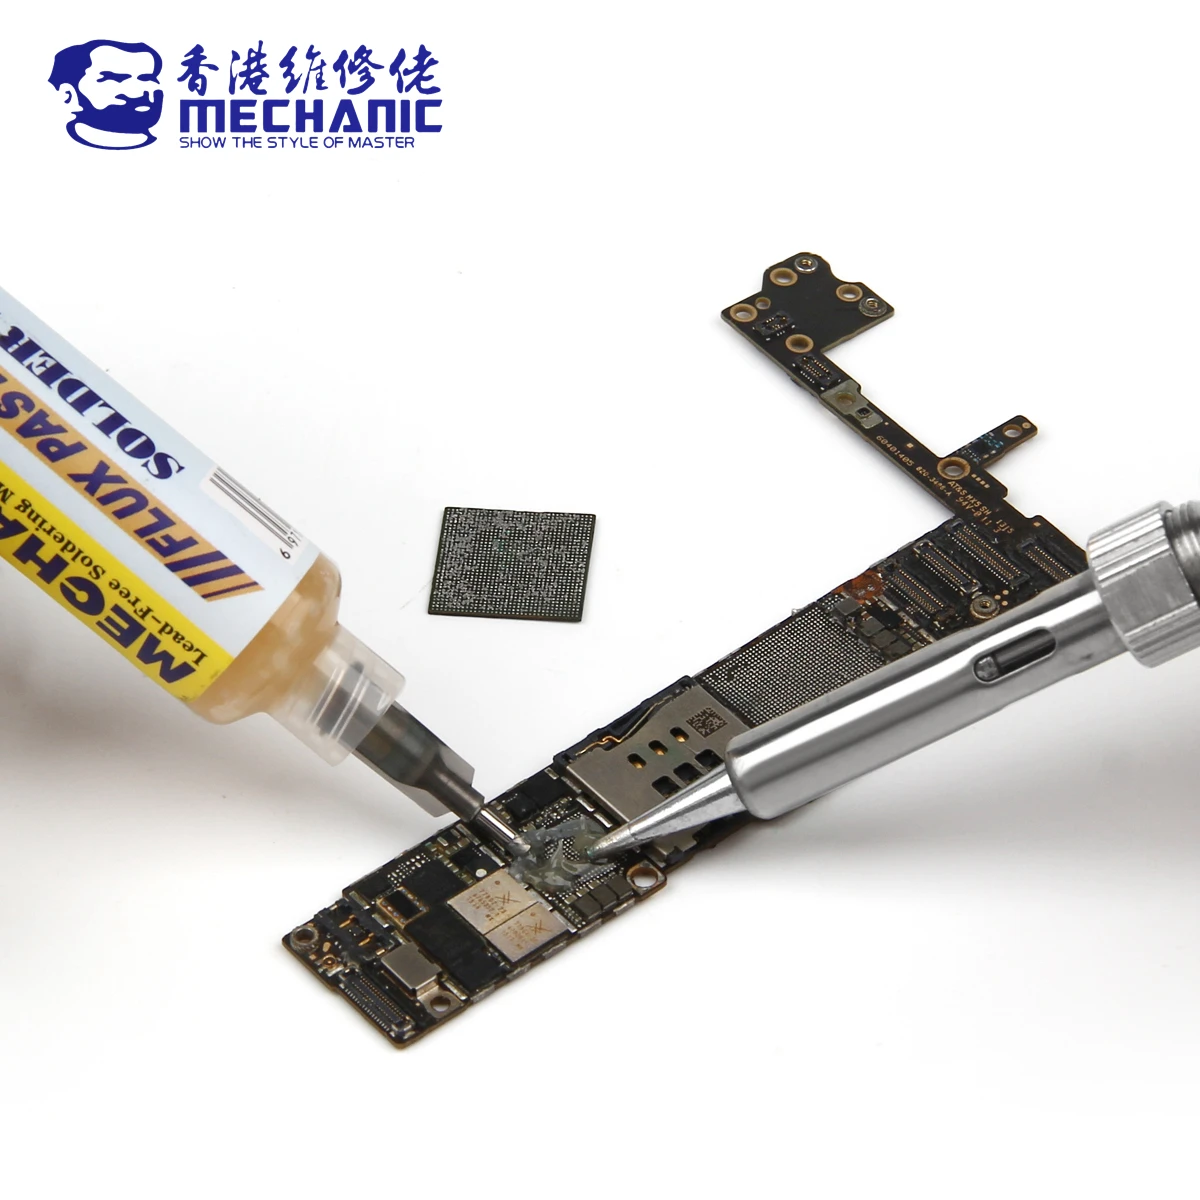 MECHANIC UV559/223 10cc High Activity Mild Rosin Lead-Free Solder Flux No-Clean Light odor Welding Paste Repair PCB BGA Board